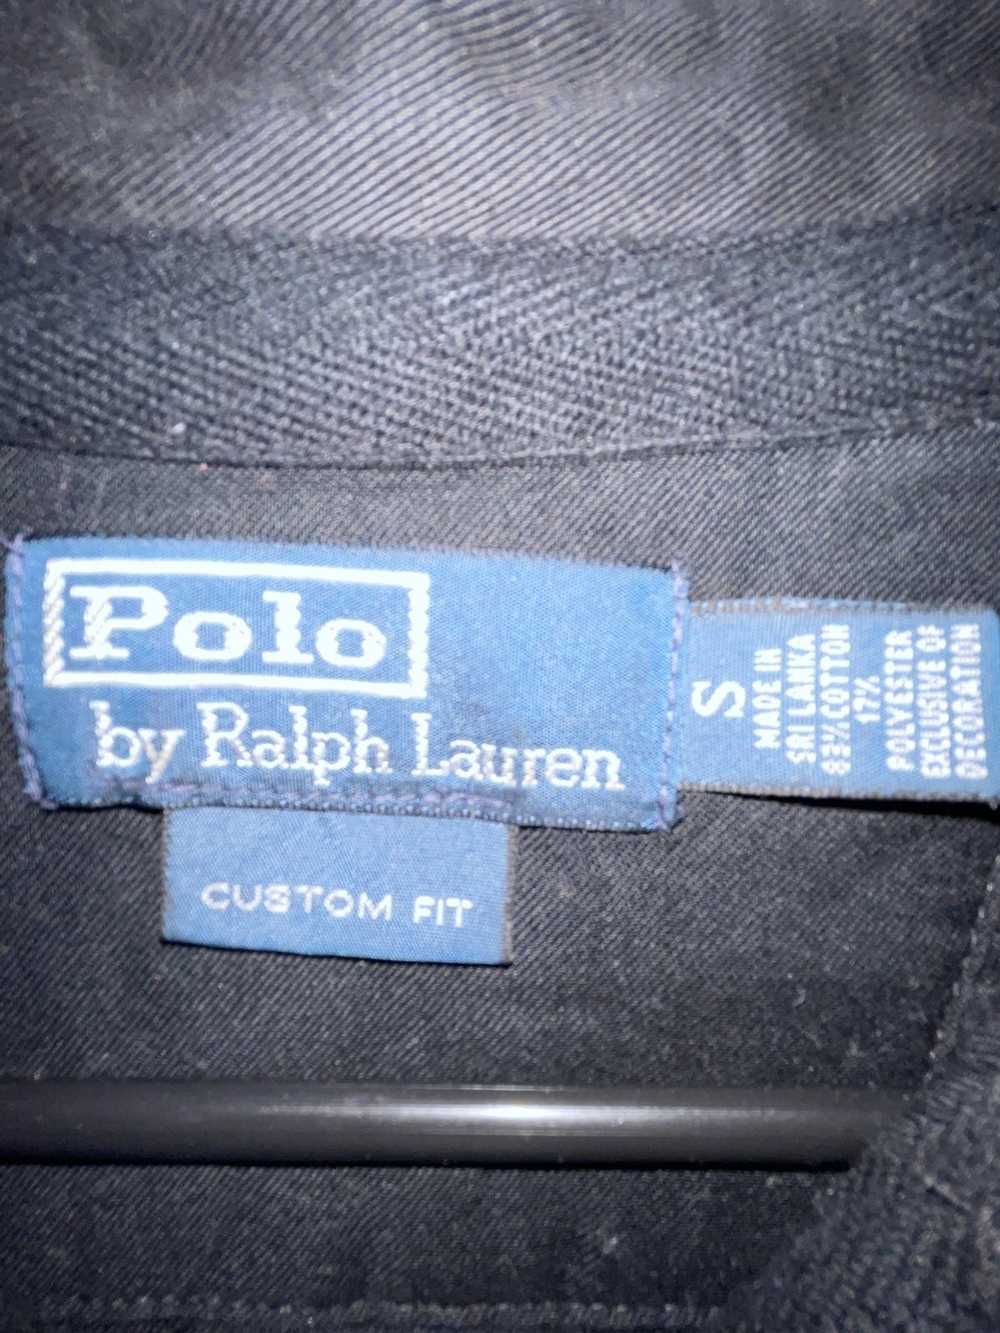 Polo Ralph Lauren Polo by Ralph Lauren - image 6